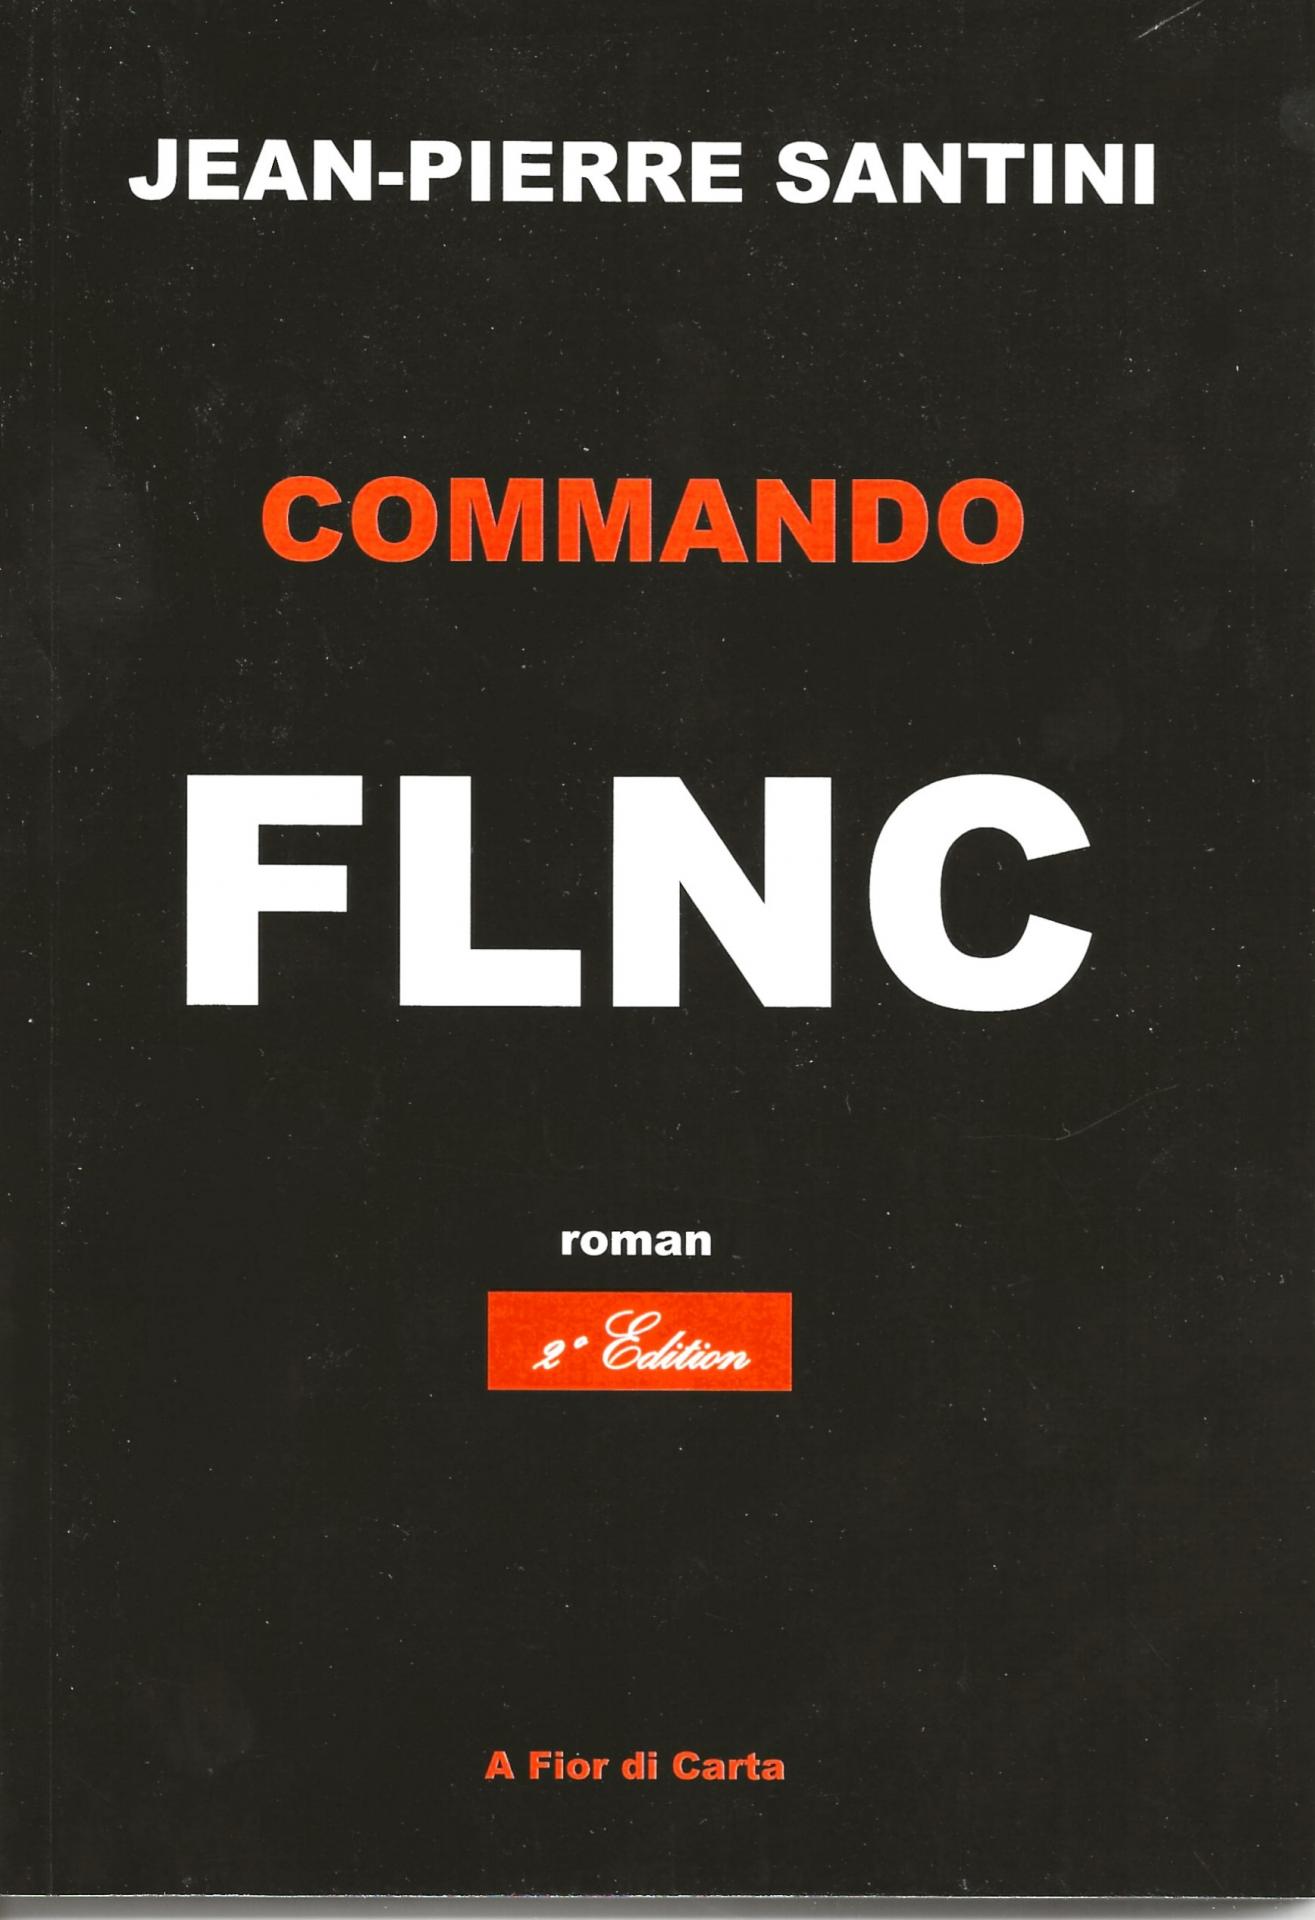 Couv 1ere commando flnc